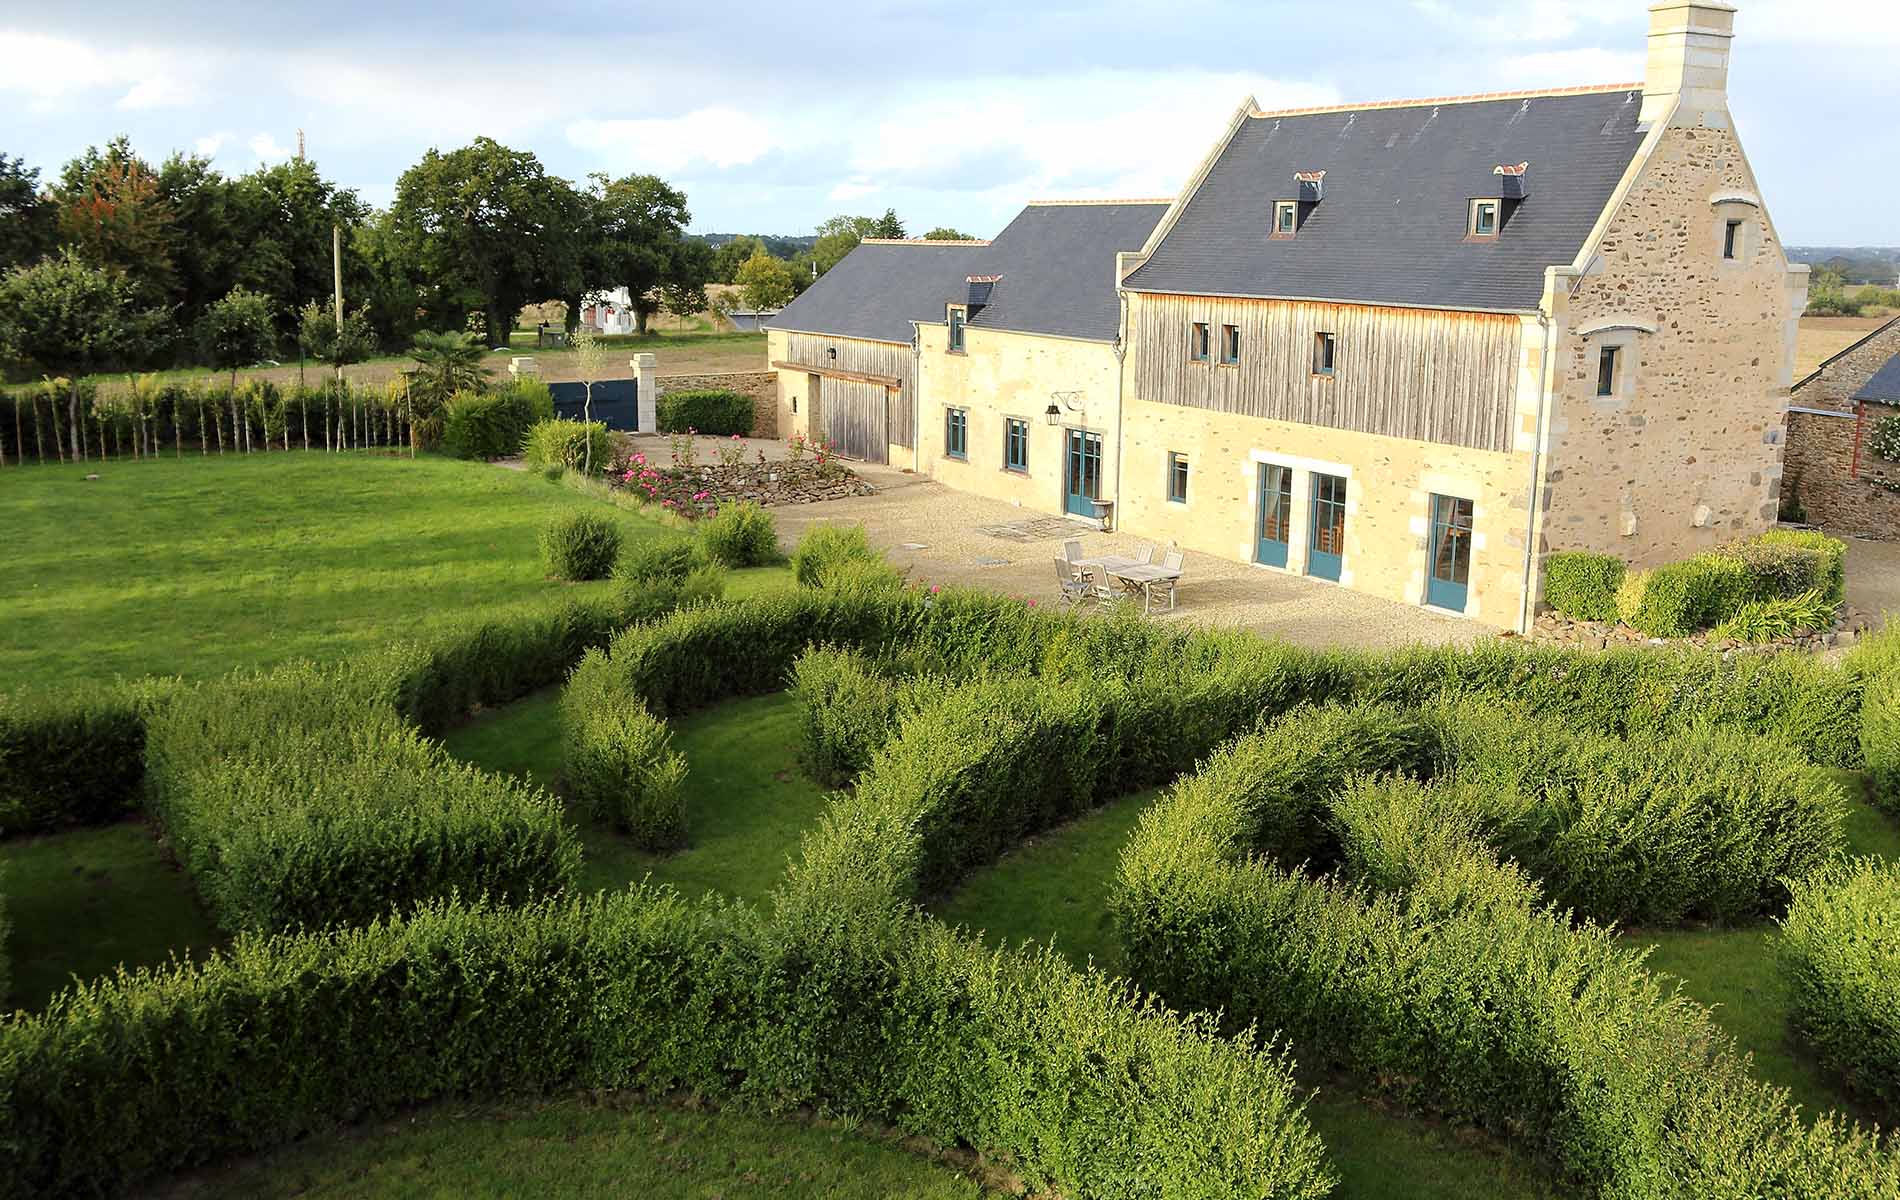 Clos Clin manor garden and labyrinth - St Malo